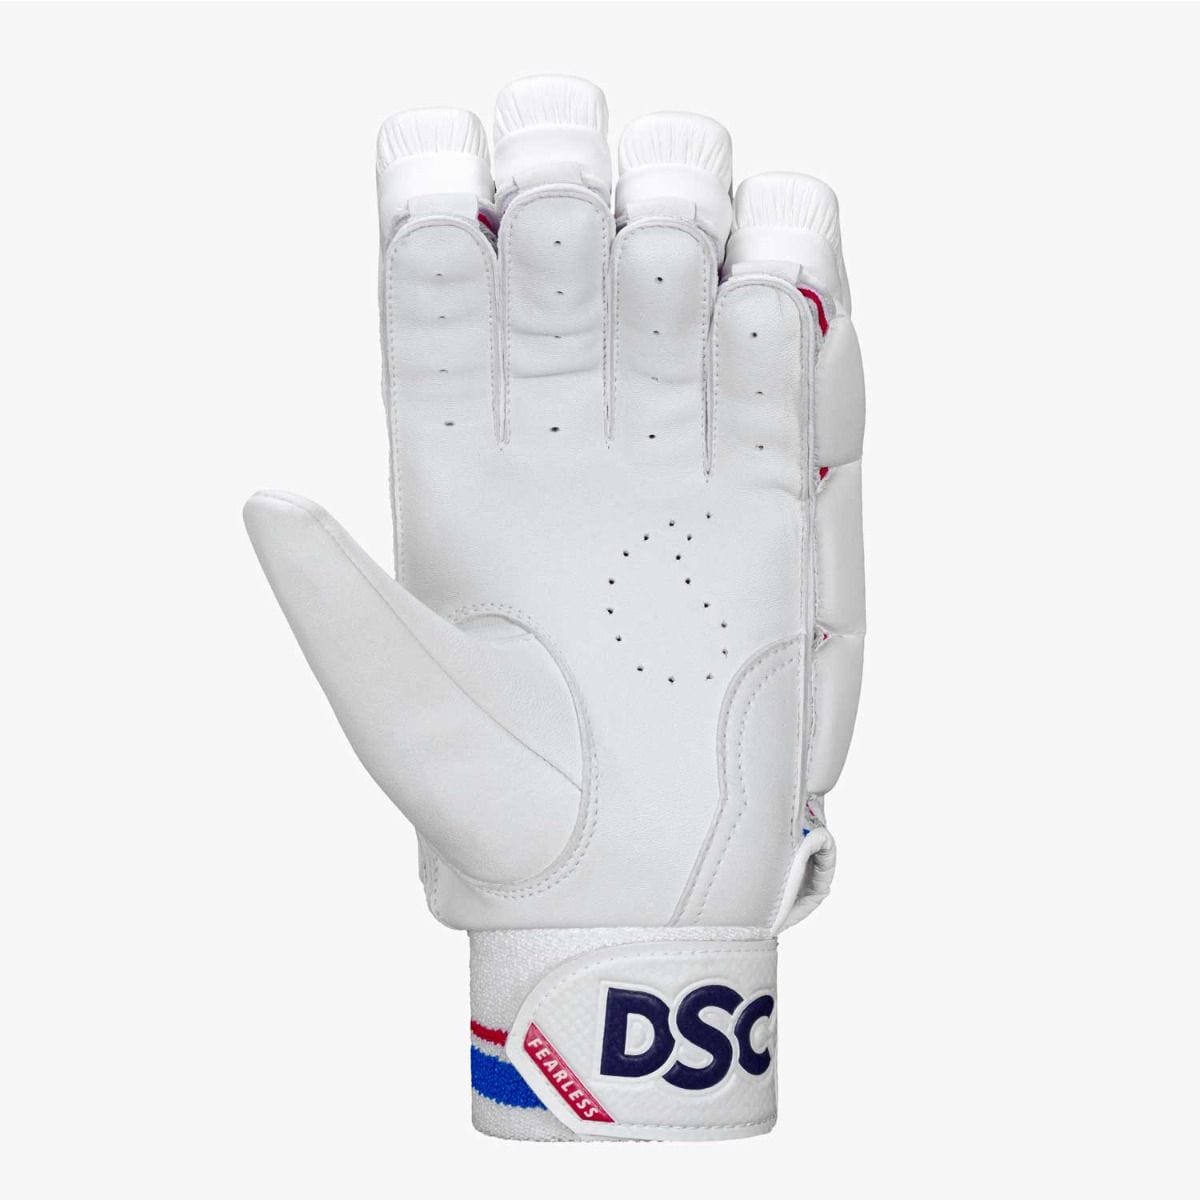 DSC Batting Gloves Intense Speed Batting Gloves